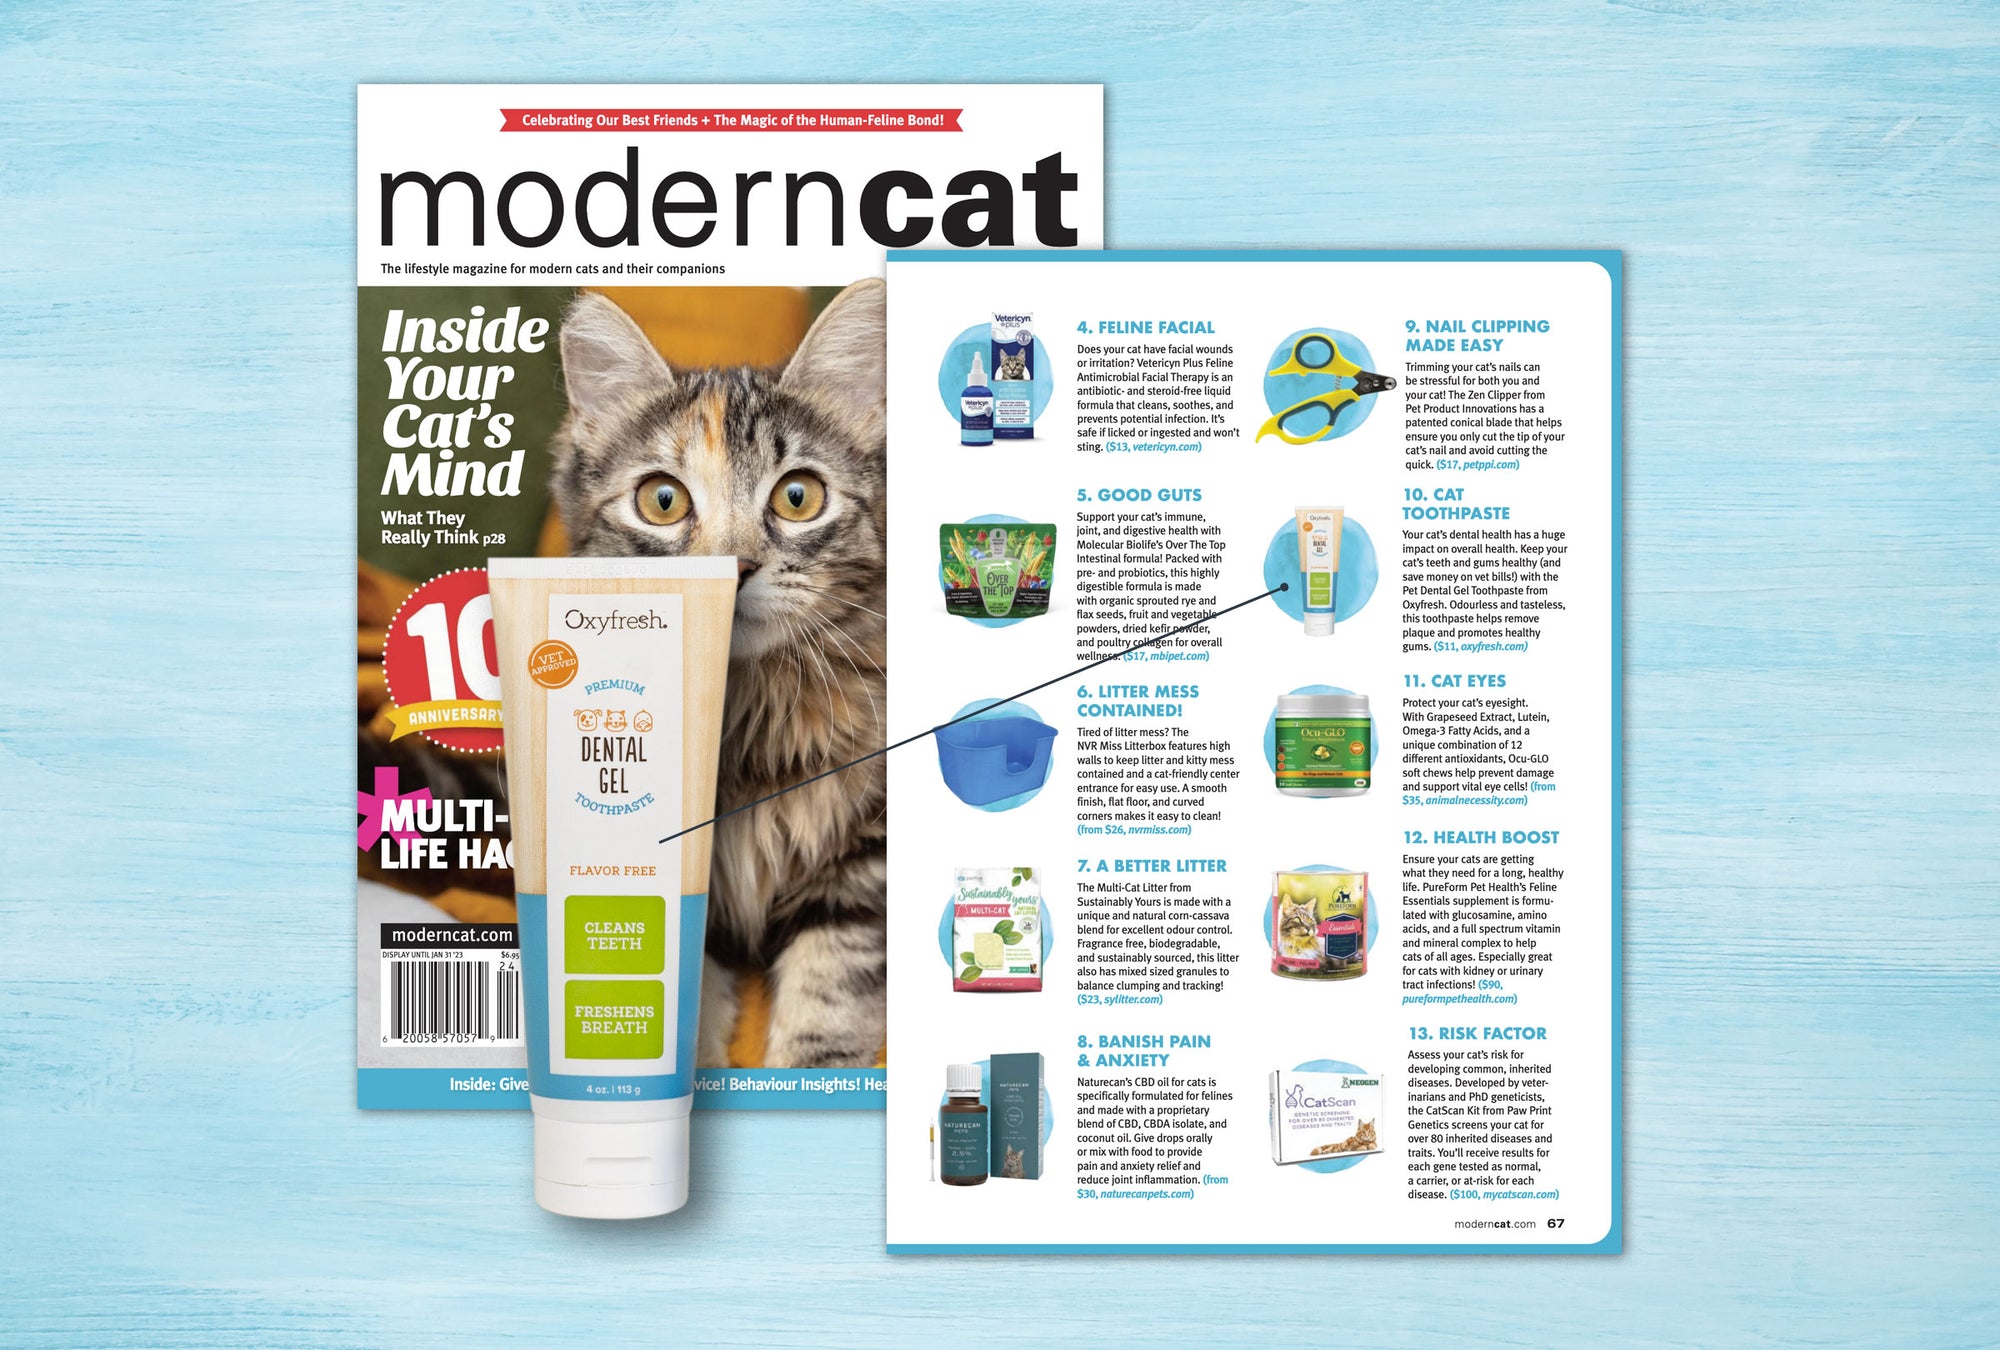 Oxyfresh Pet Dental Gel Toothpaste Featured In Modern Cat